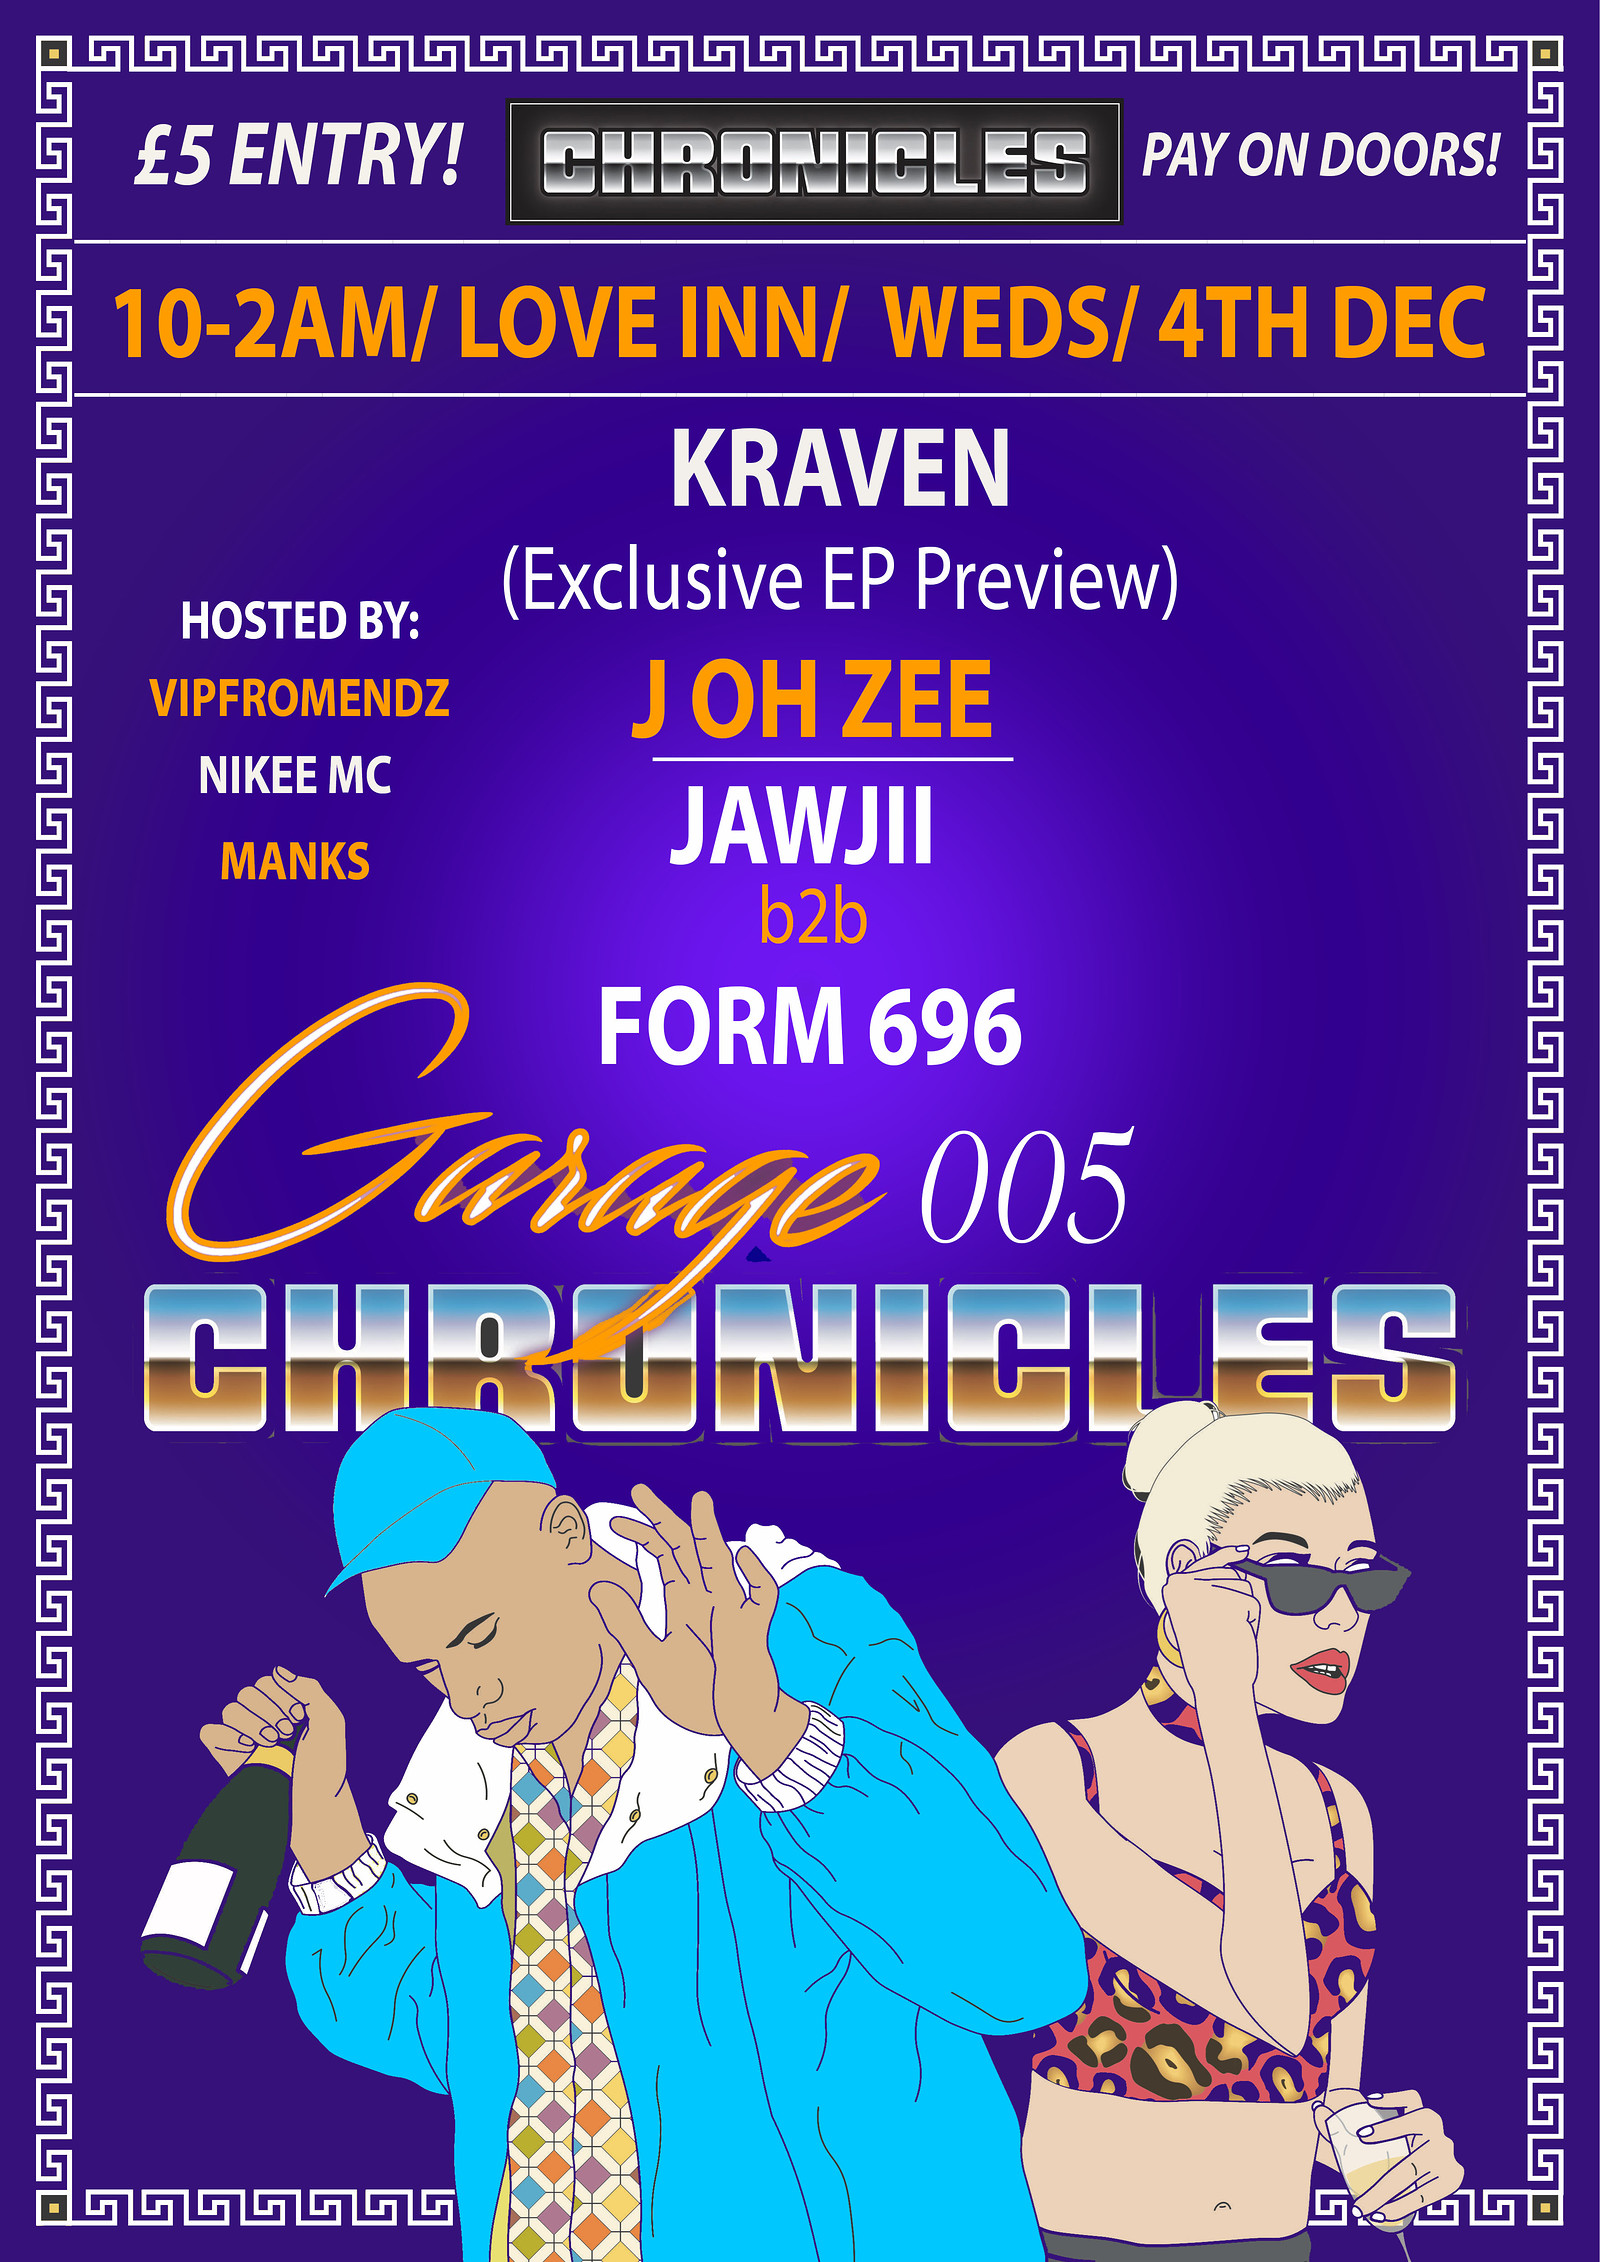 Garage Chronicles 005 at The Love Inn